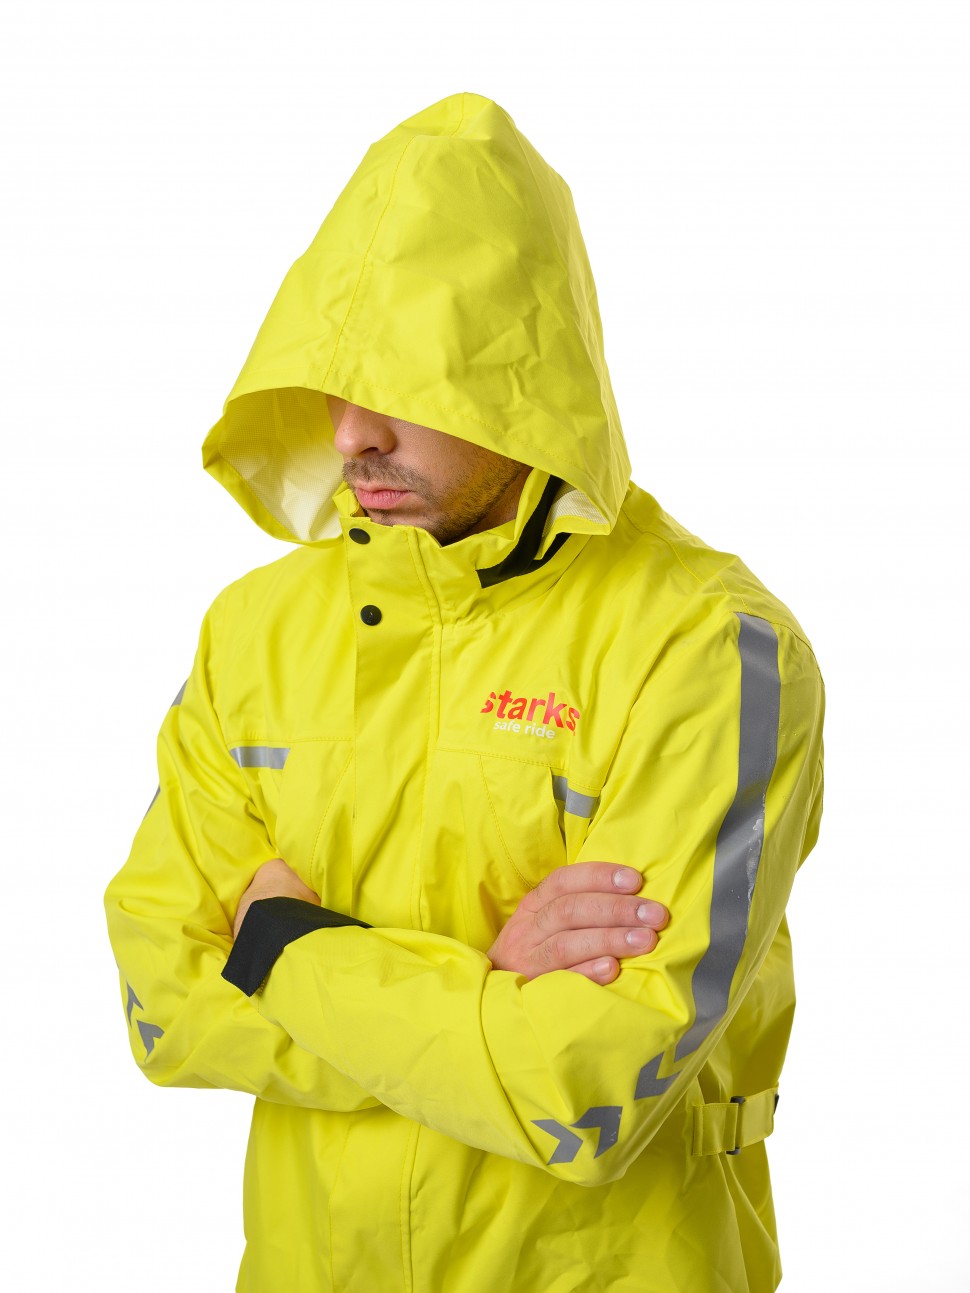 фото Starks starks мото дождевик rain city, цвет желтый/черный (куртка+брюки), размер xs